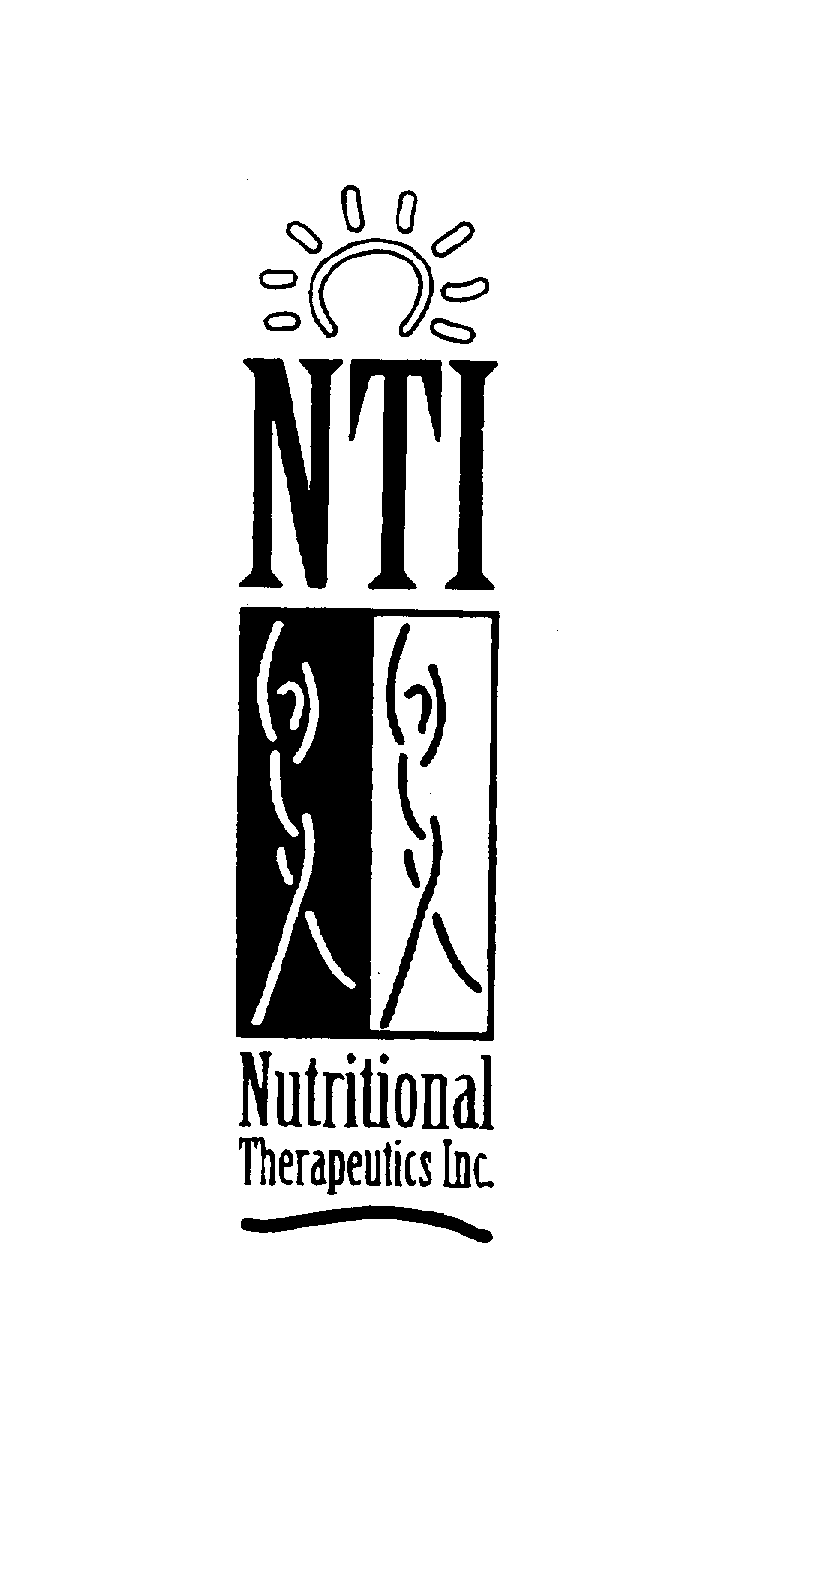  NTI NUTRITIONAL THERAPEUTICS INC.